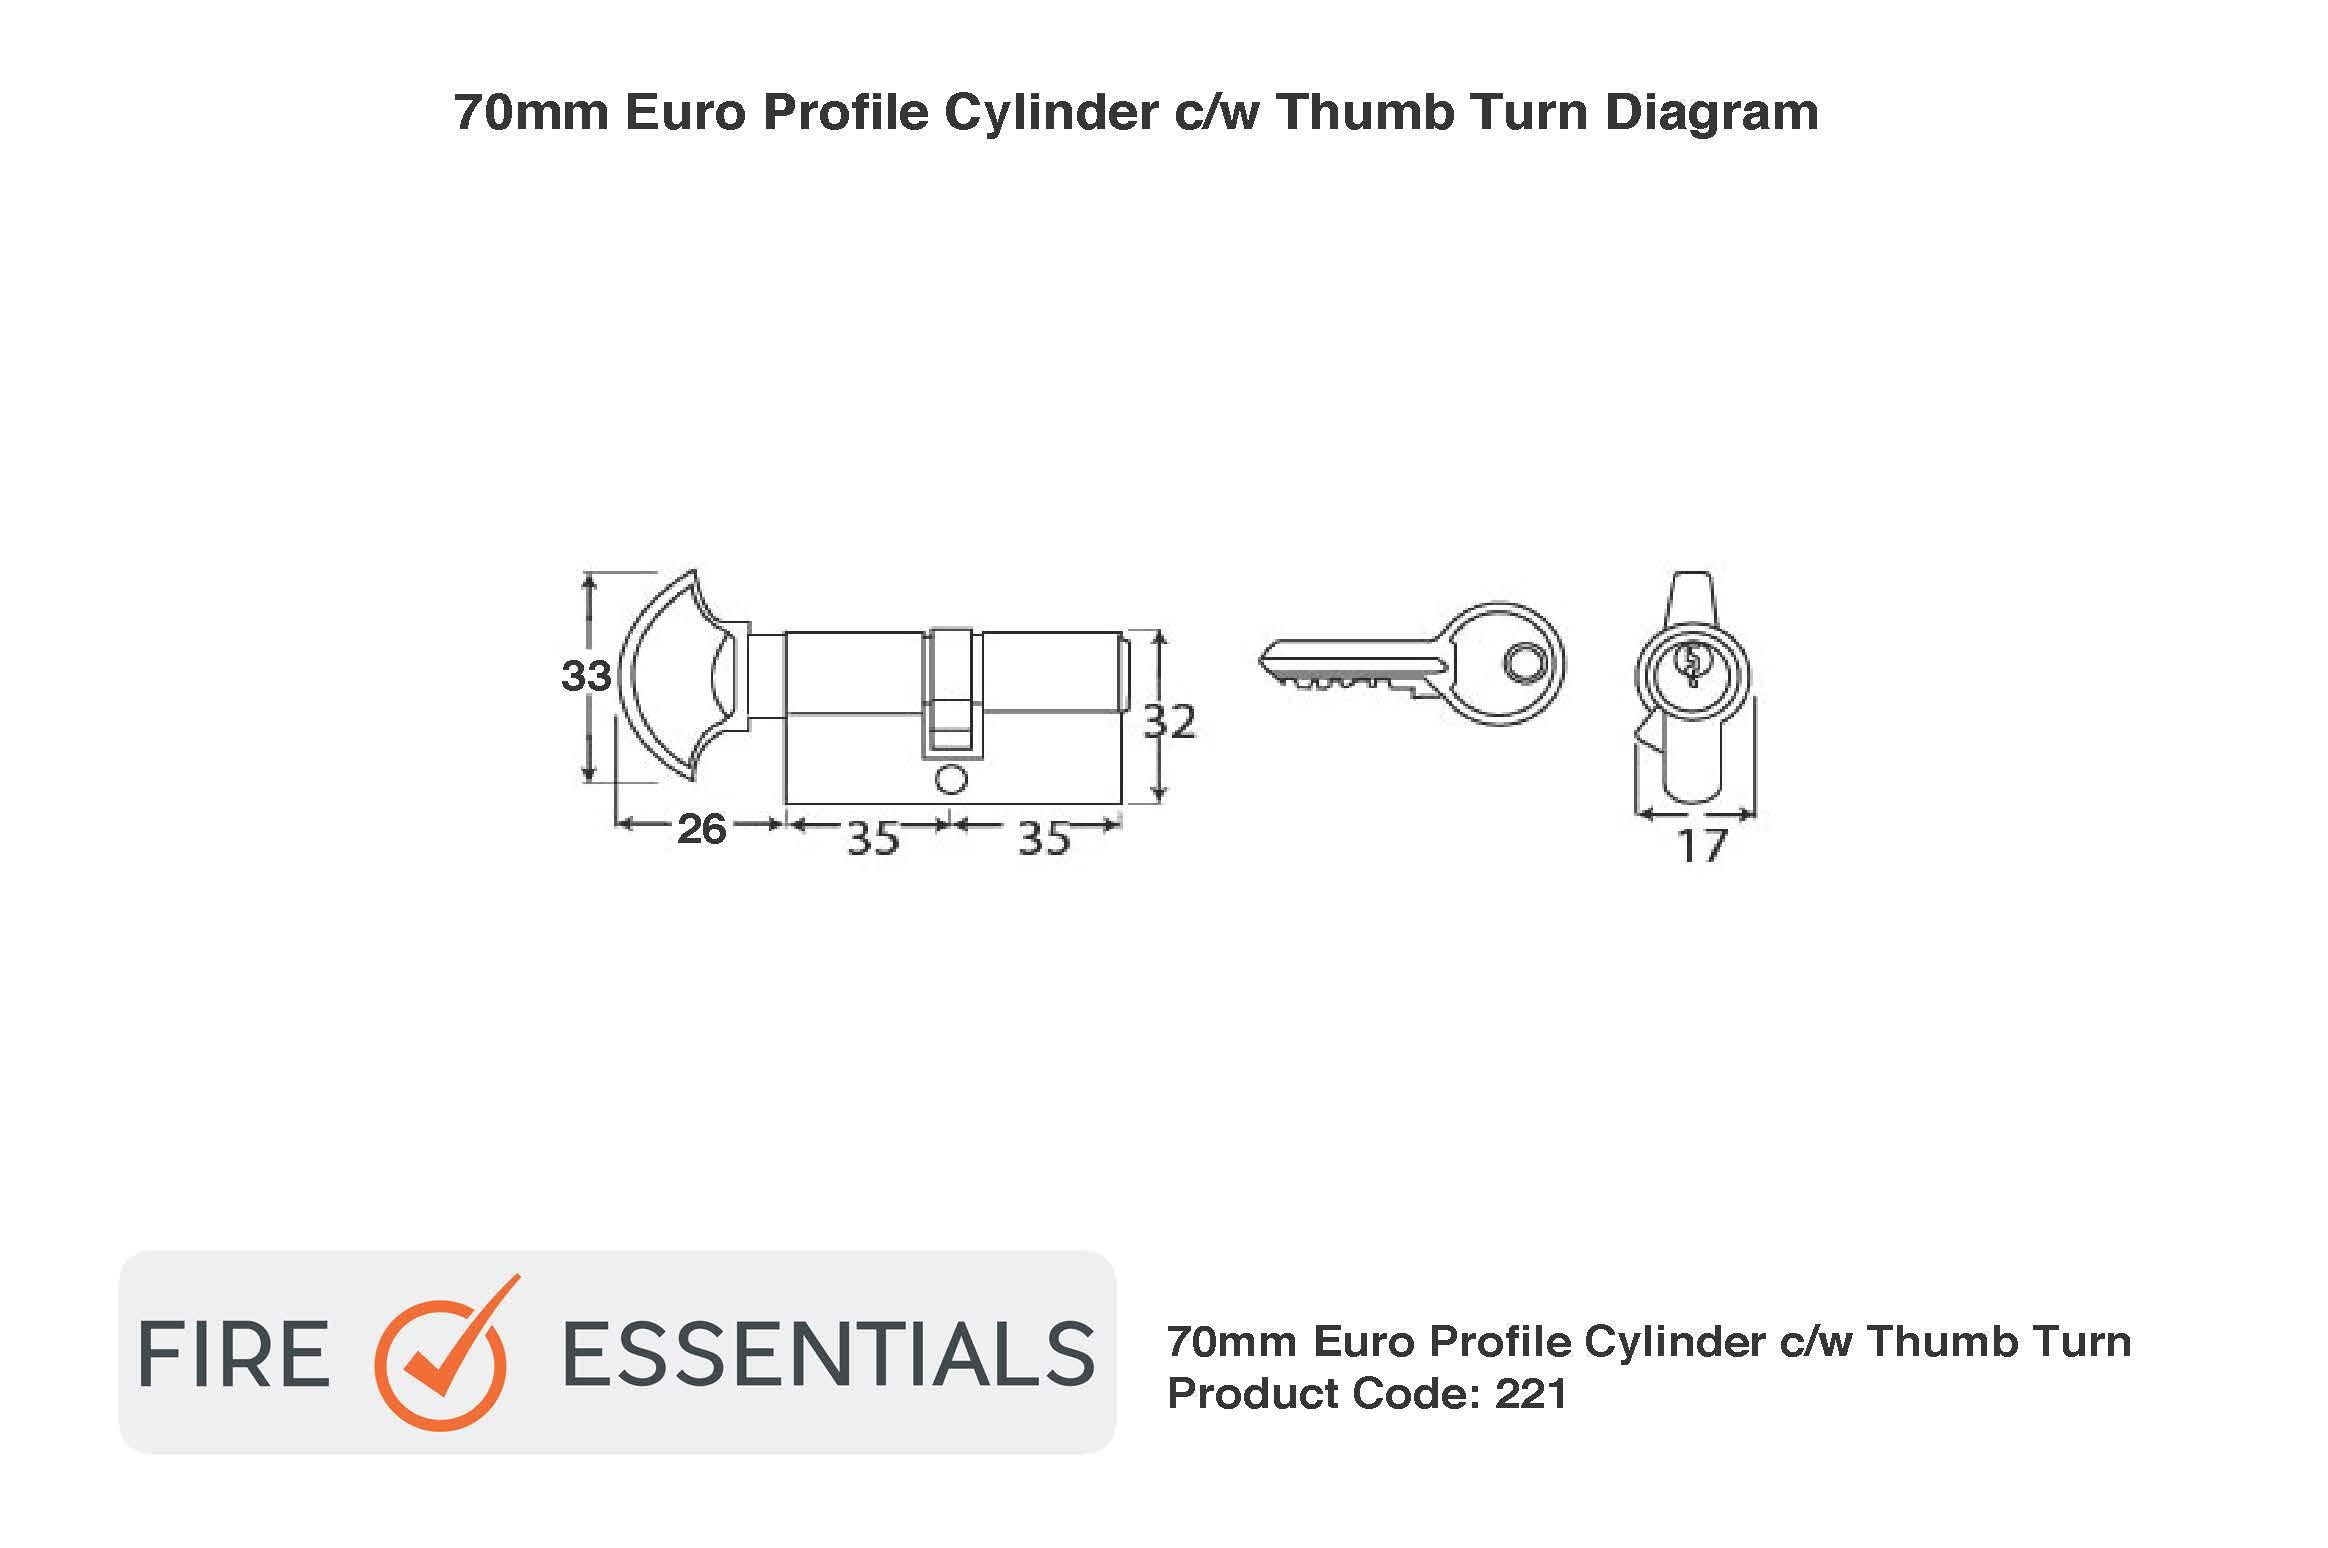 FD30 Fire Essentials Cylinder Thumbturn Diagram